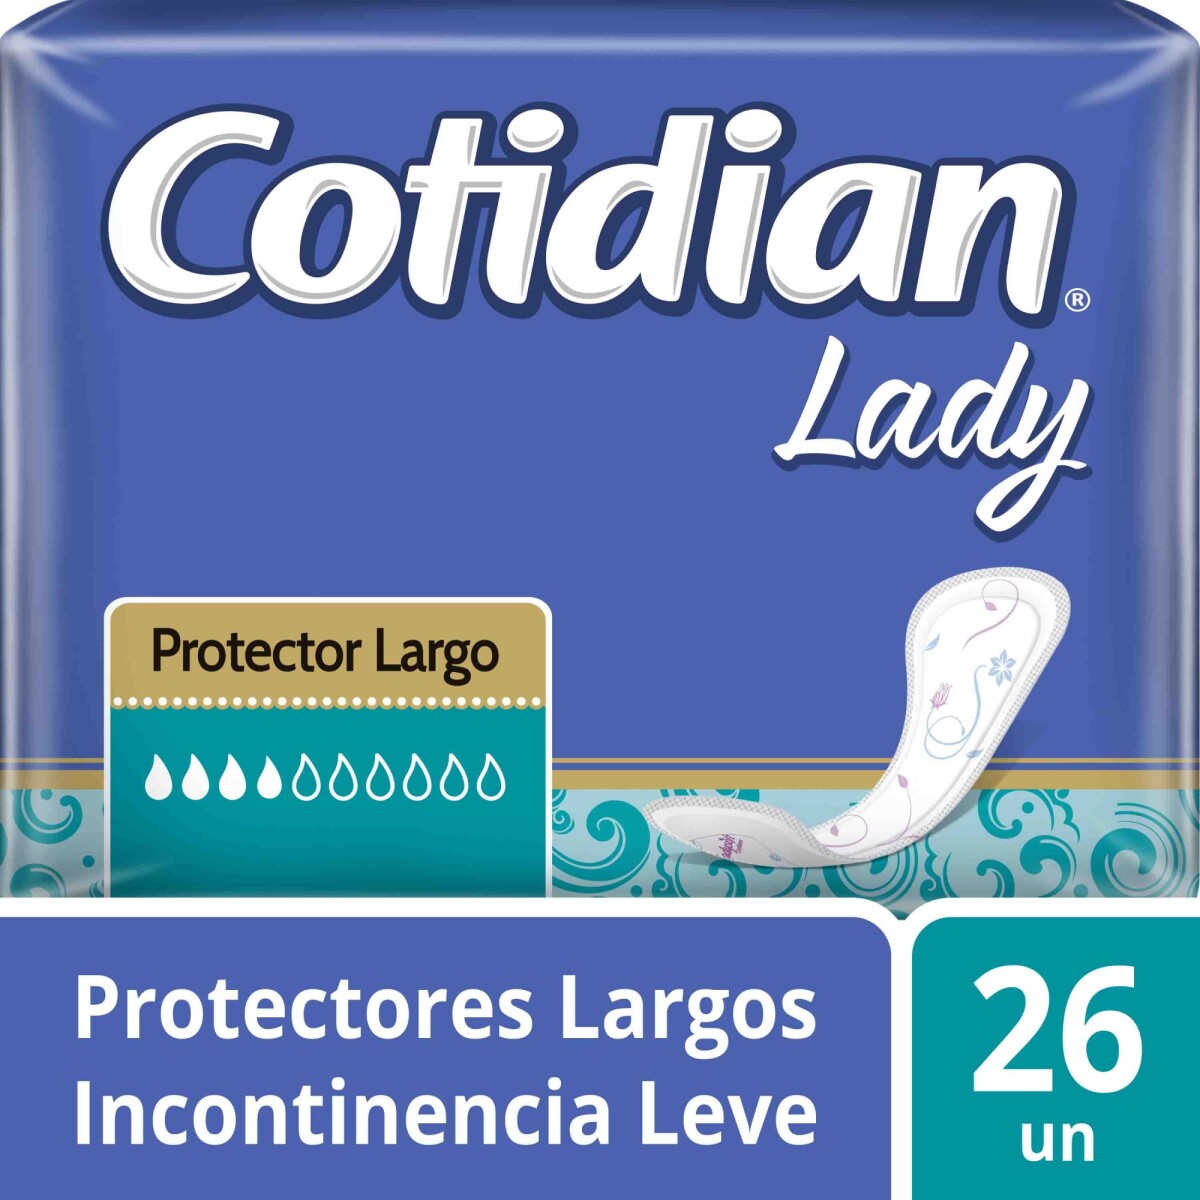 Cotidian Protector de cama - Cotidian Uruguay